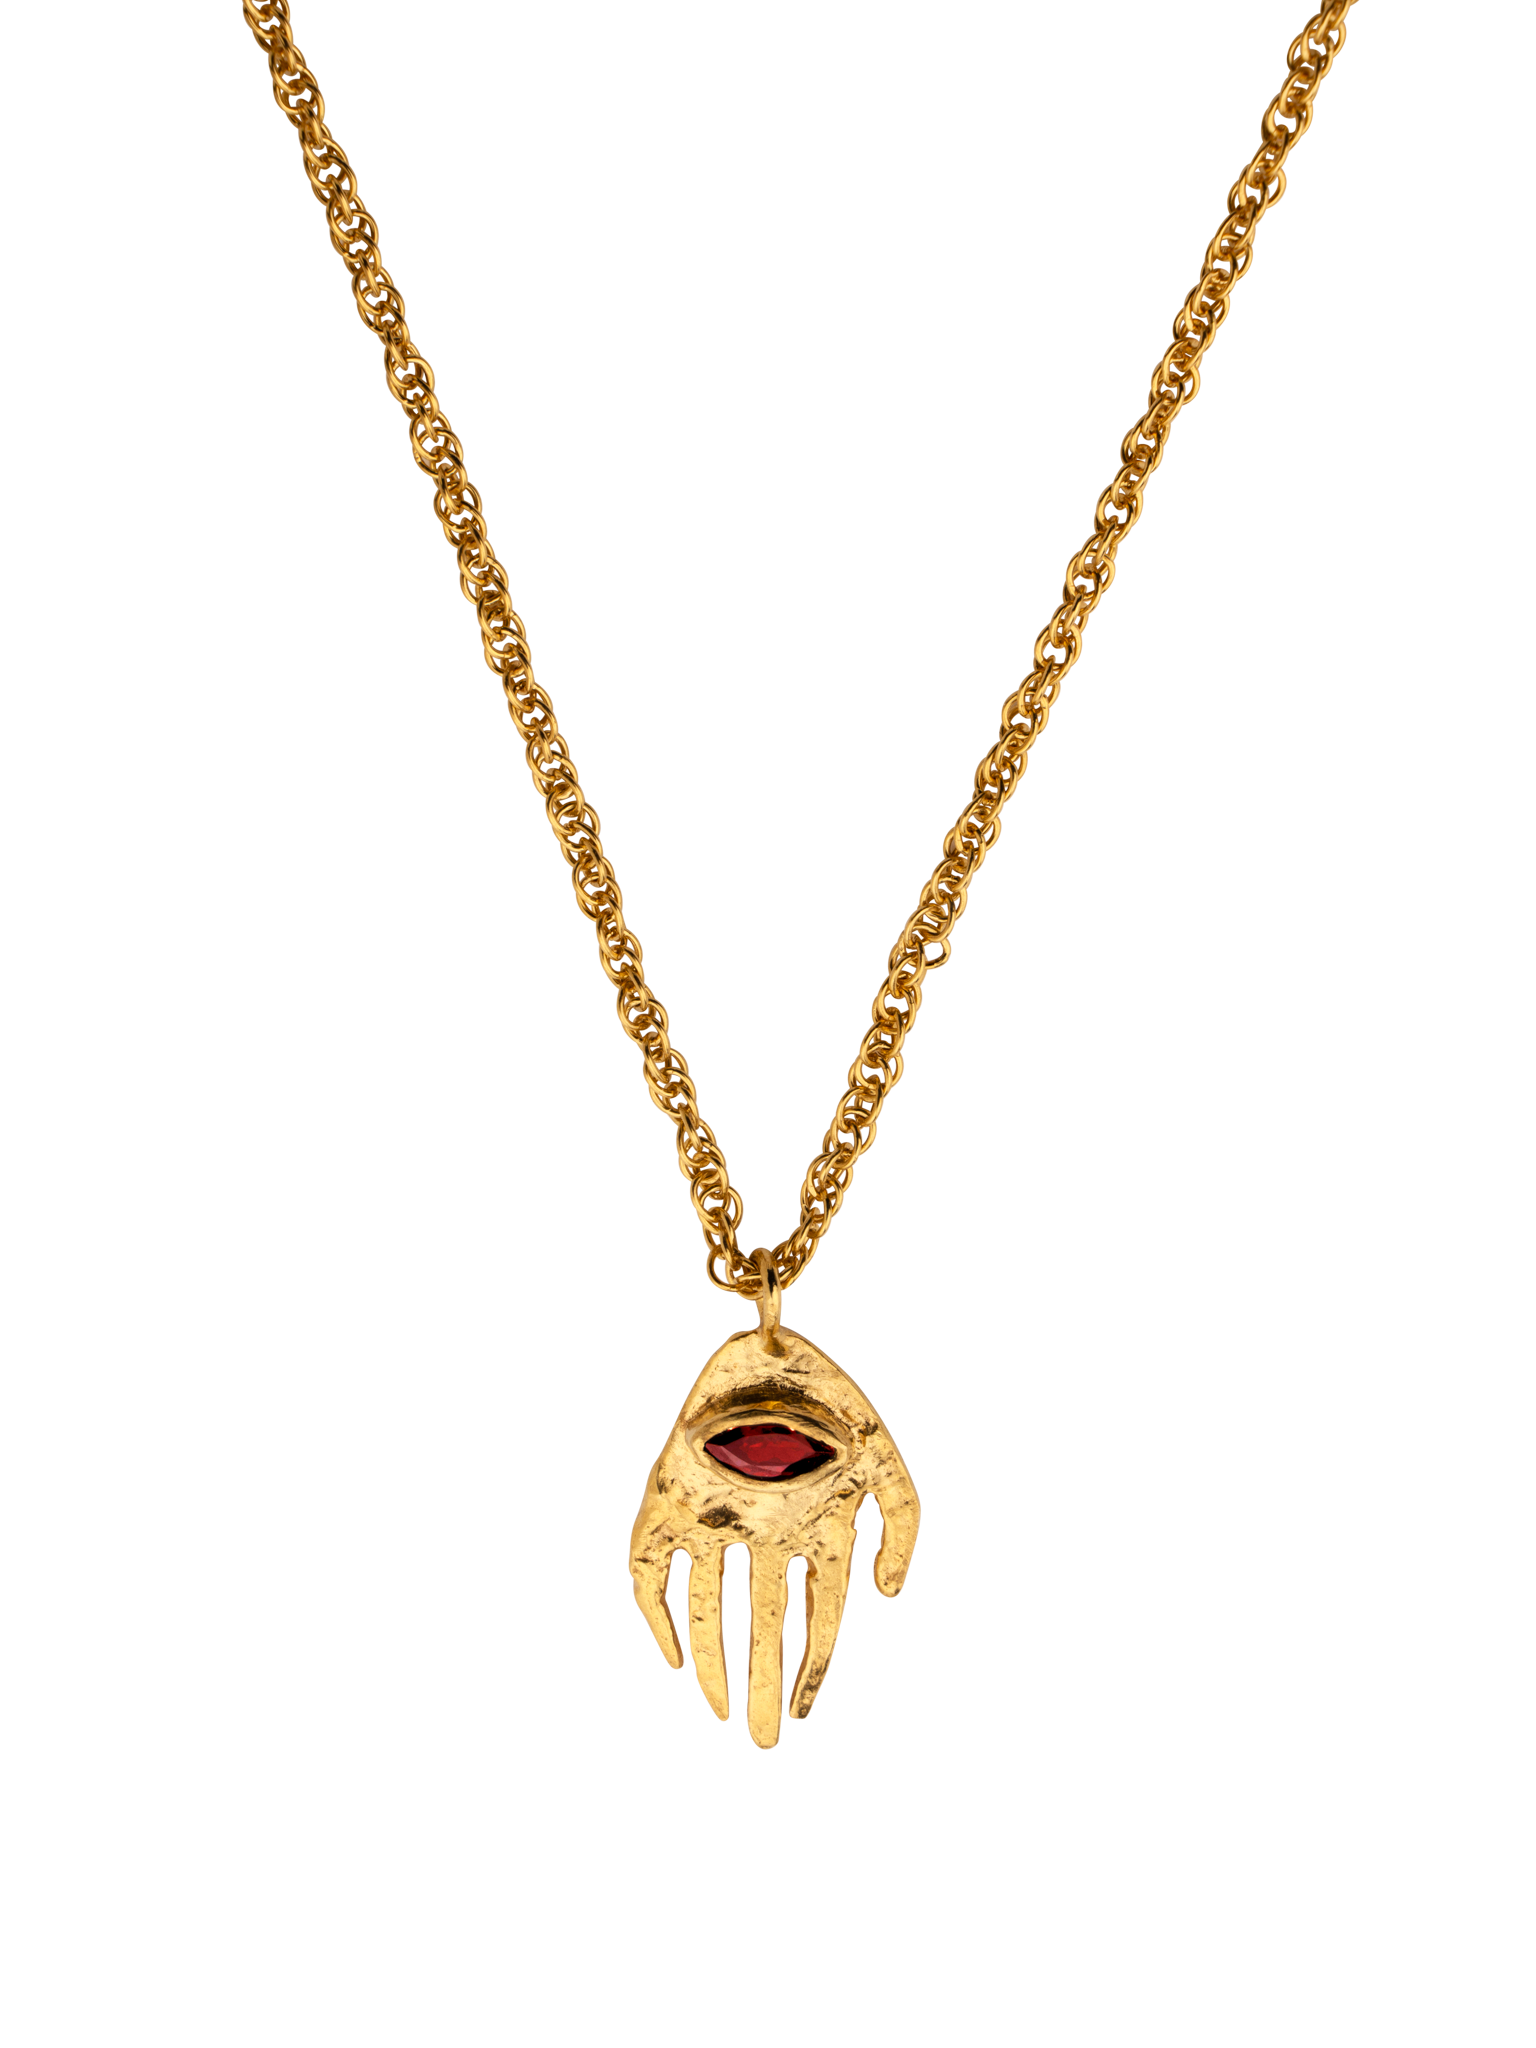 Custodia long necklace in gold vermeil